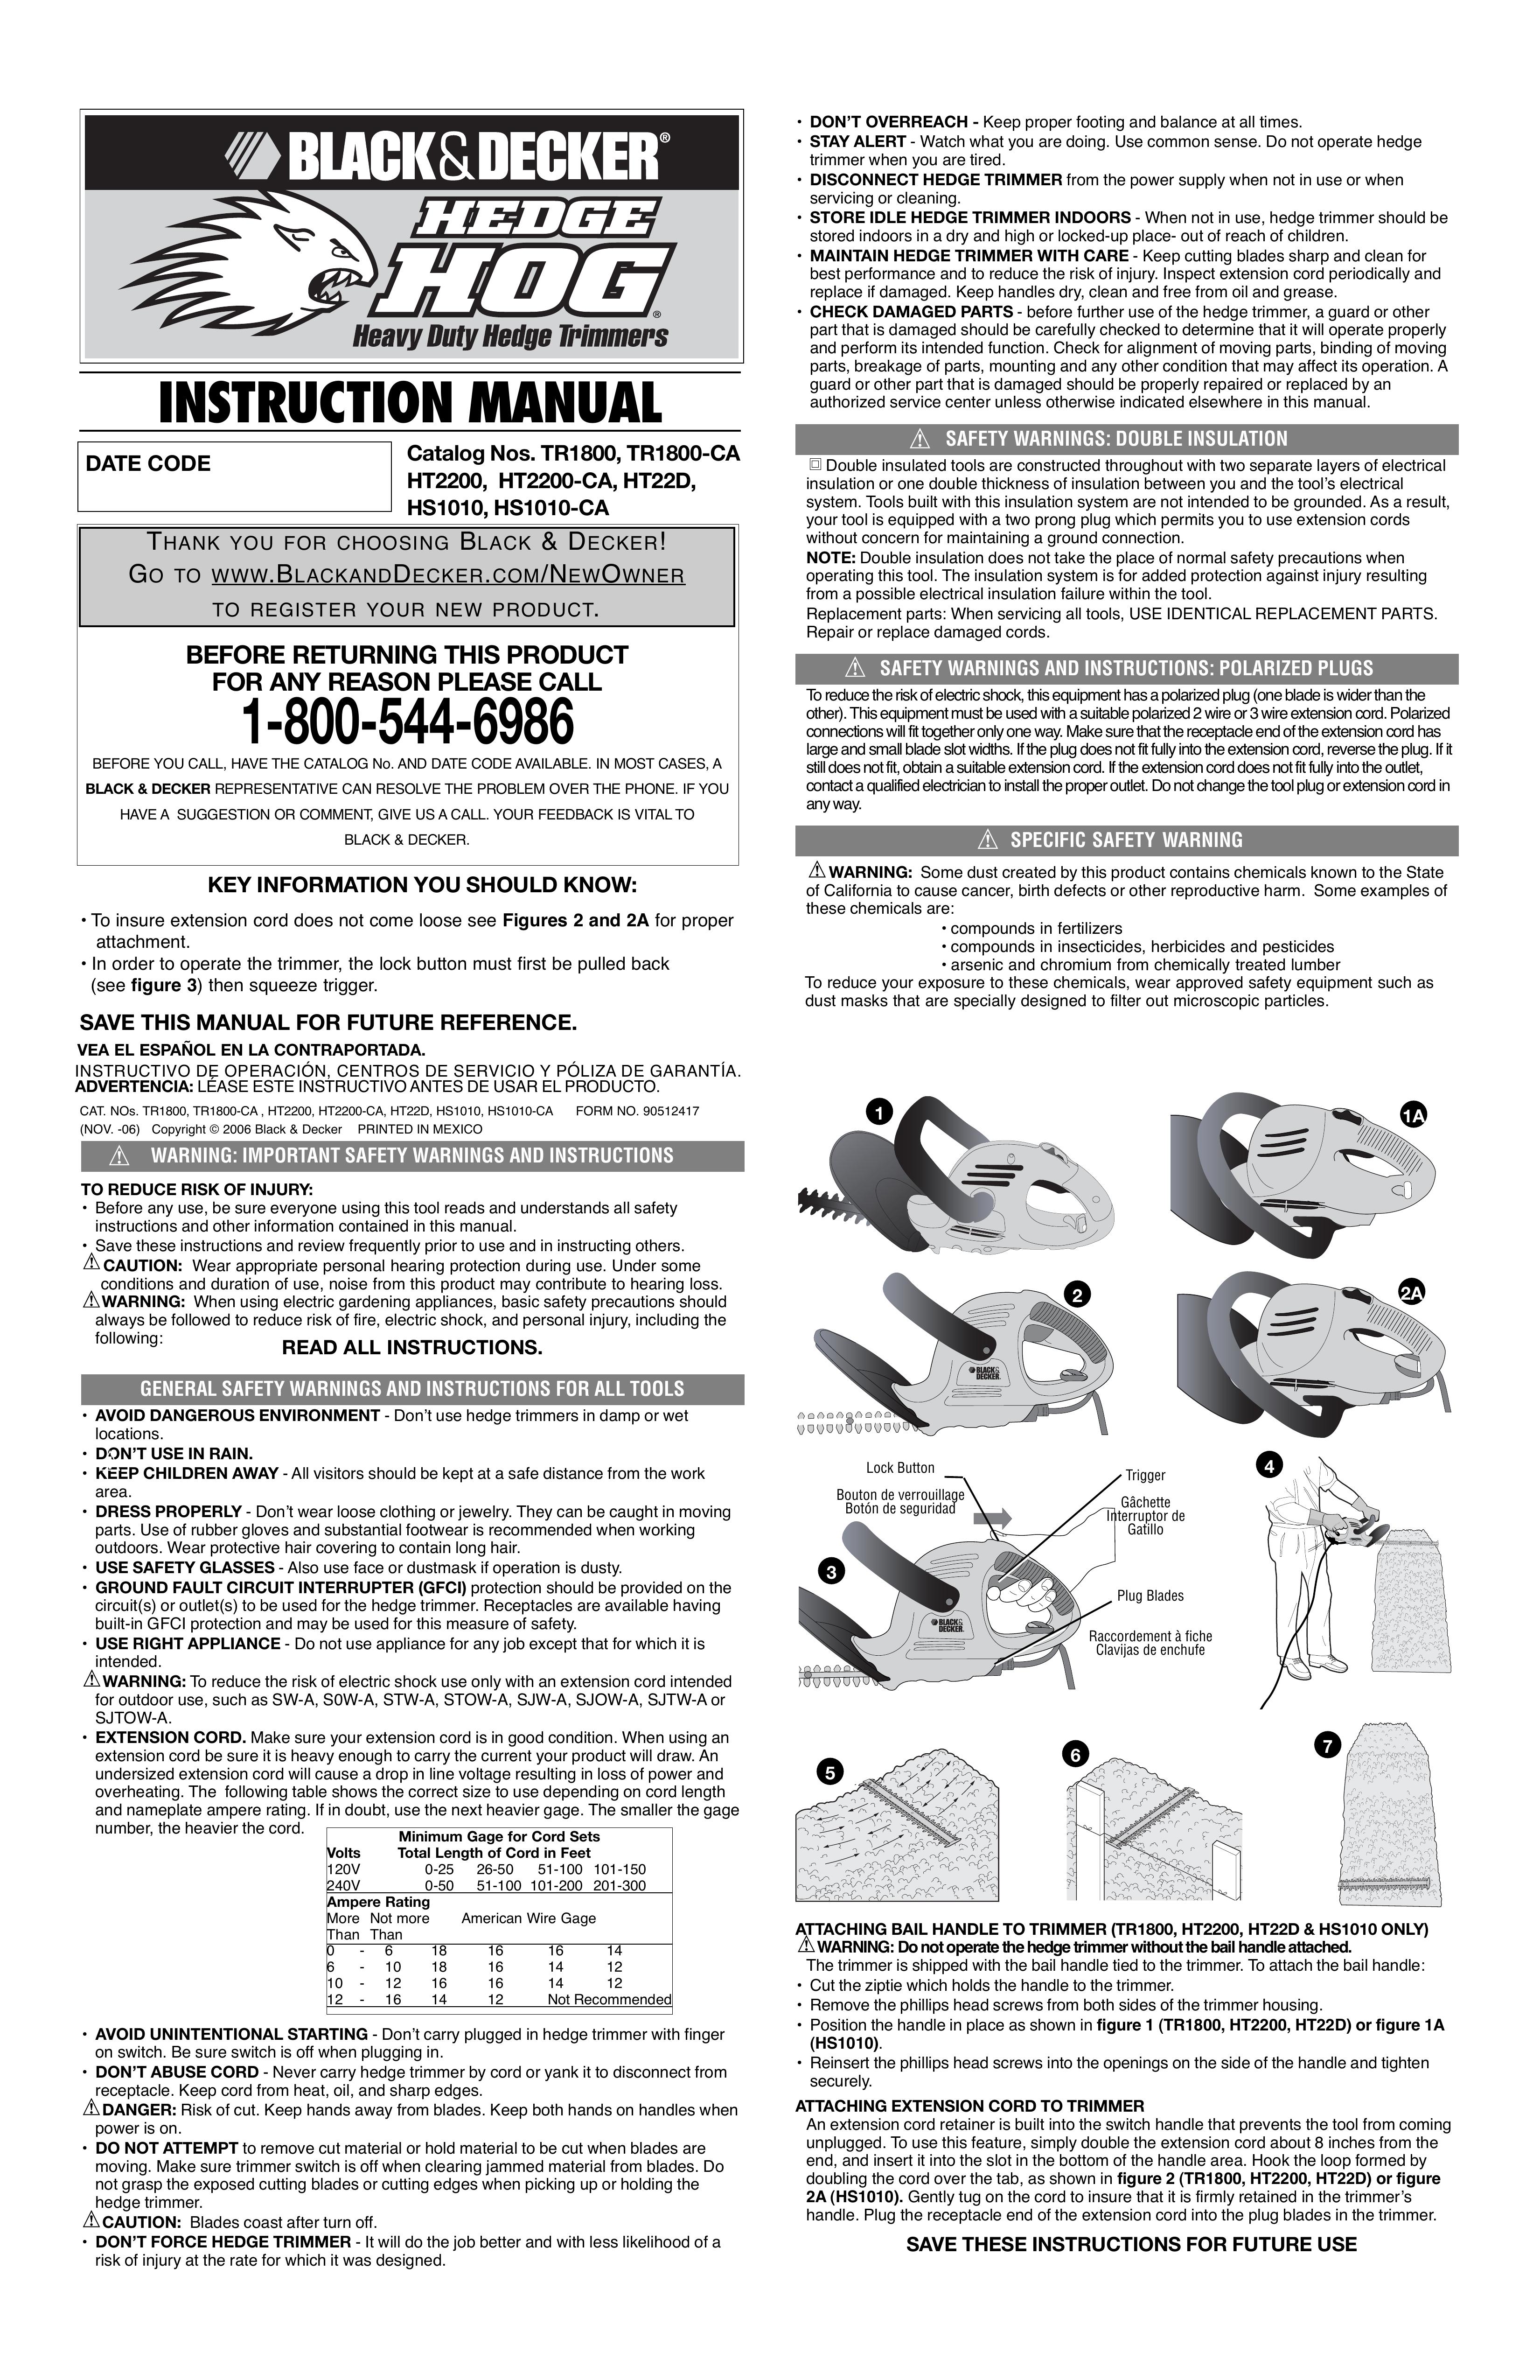 Black & Decker 90512417 Trimmer User Manual